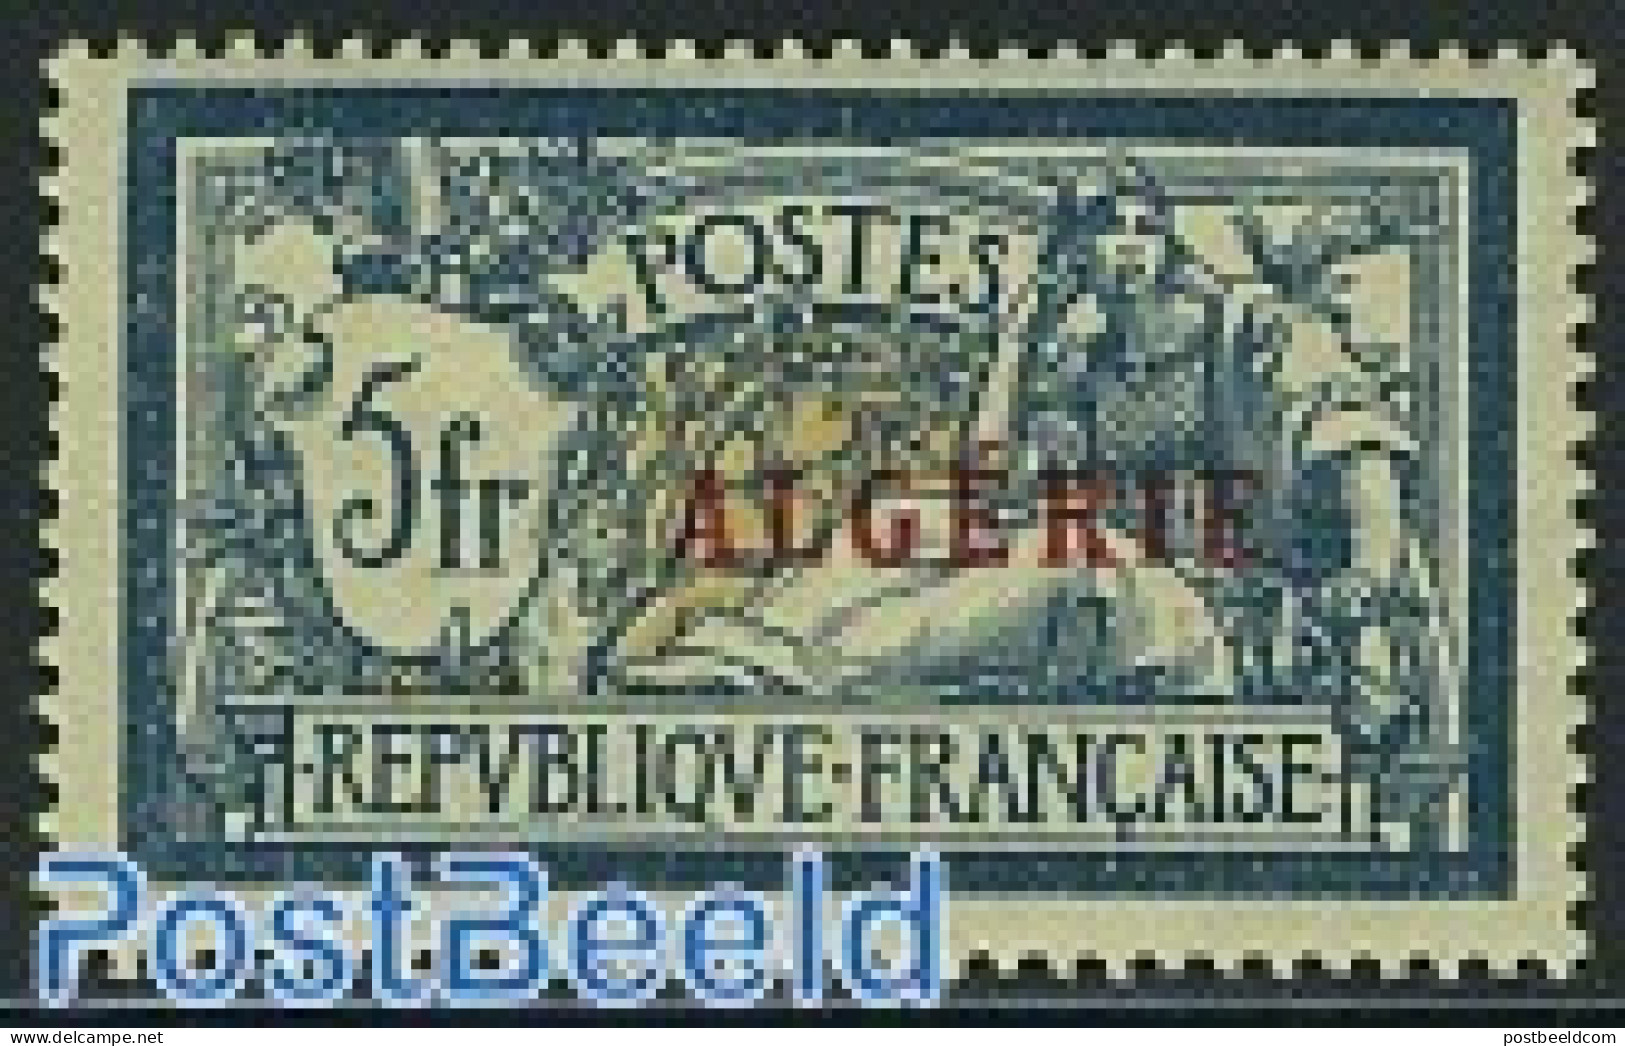 Algeria 1924 5F, Stamp Out Of Set, Unused (hinged) - Ungebraucht